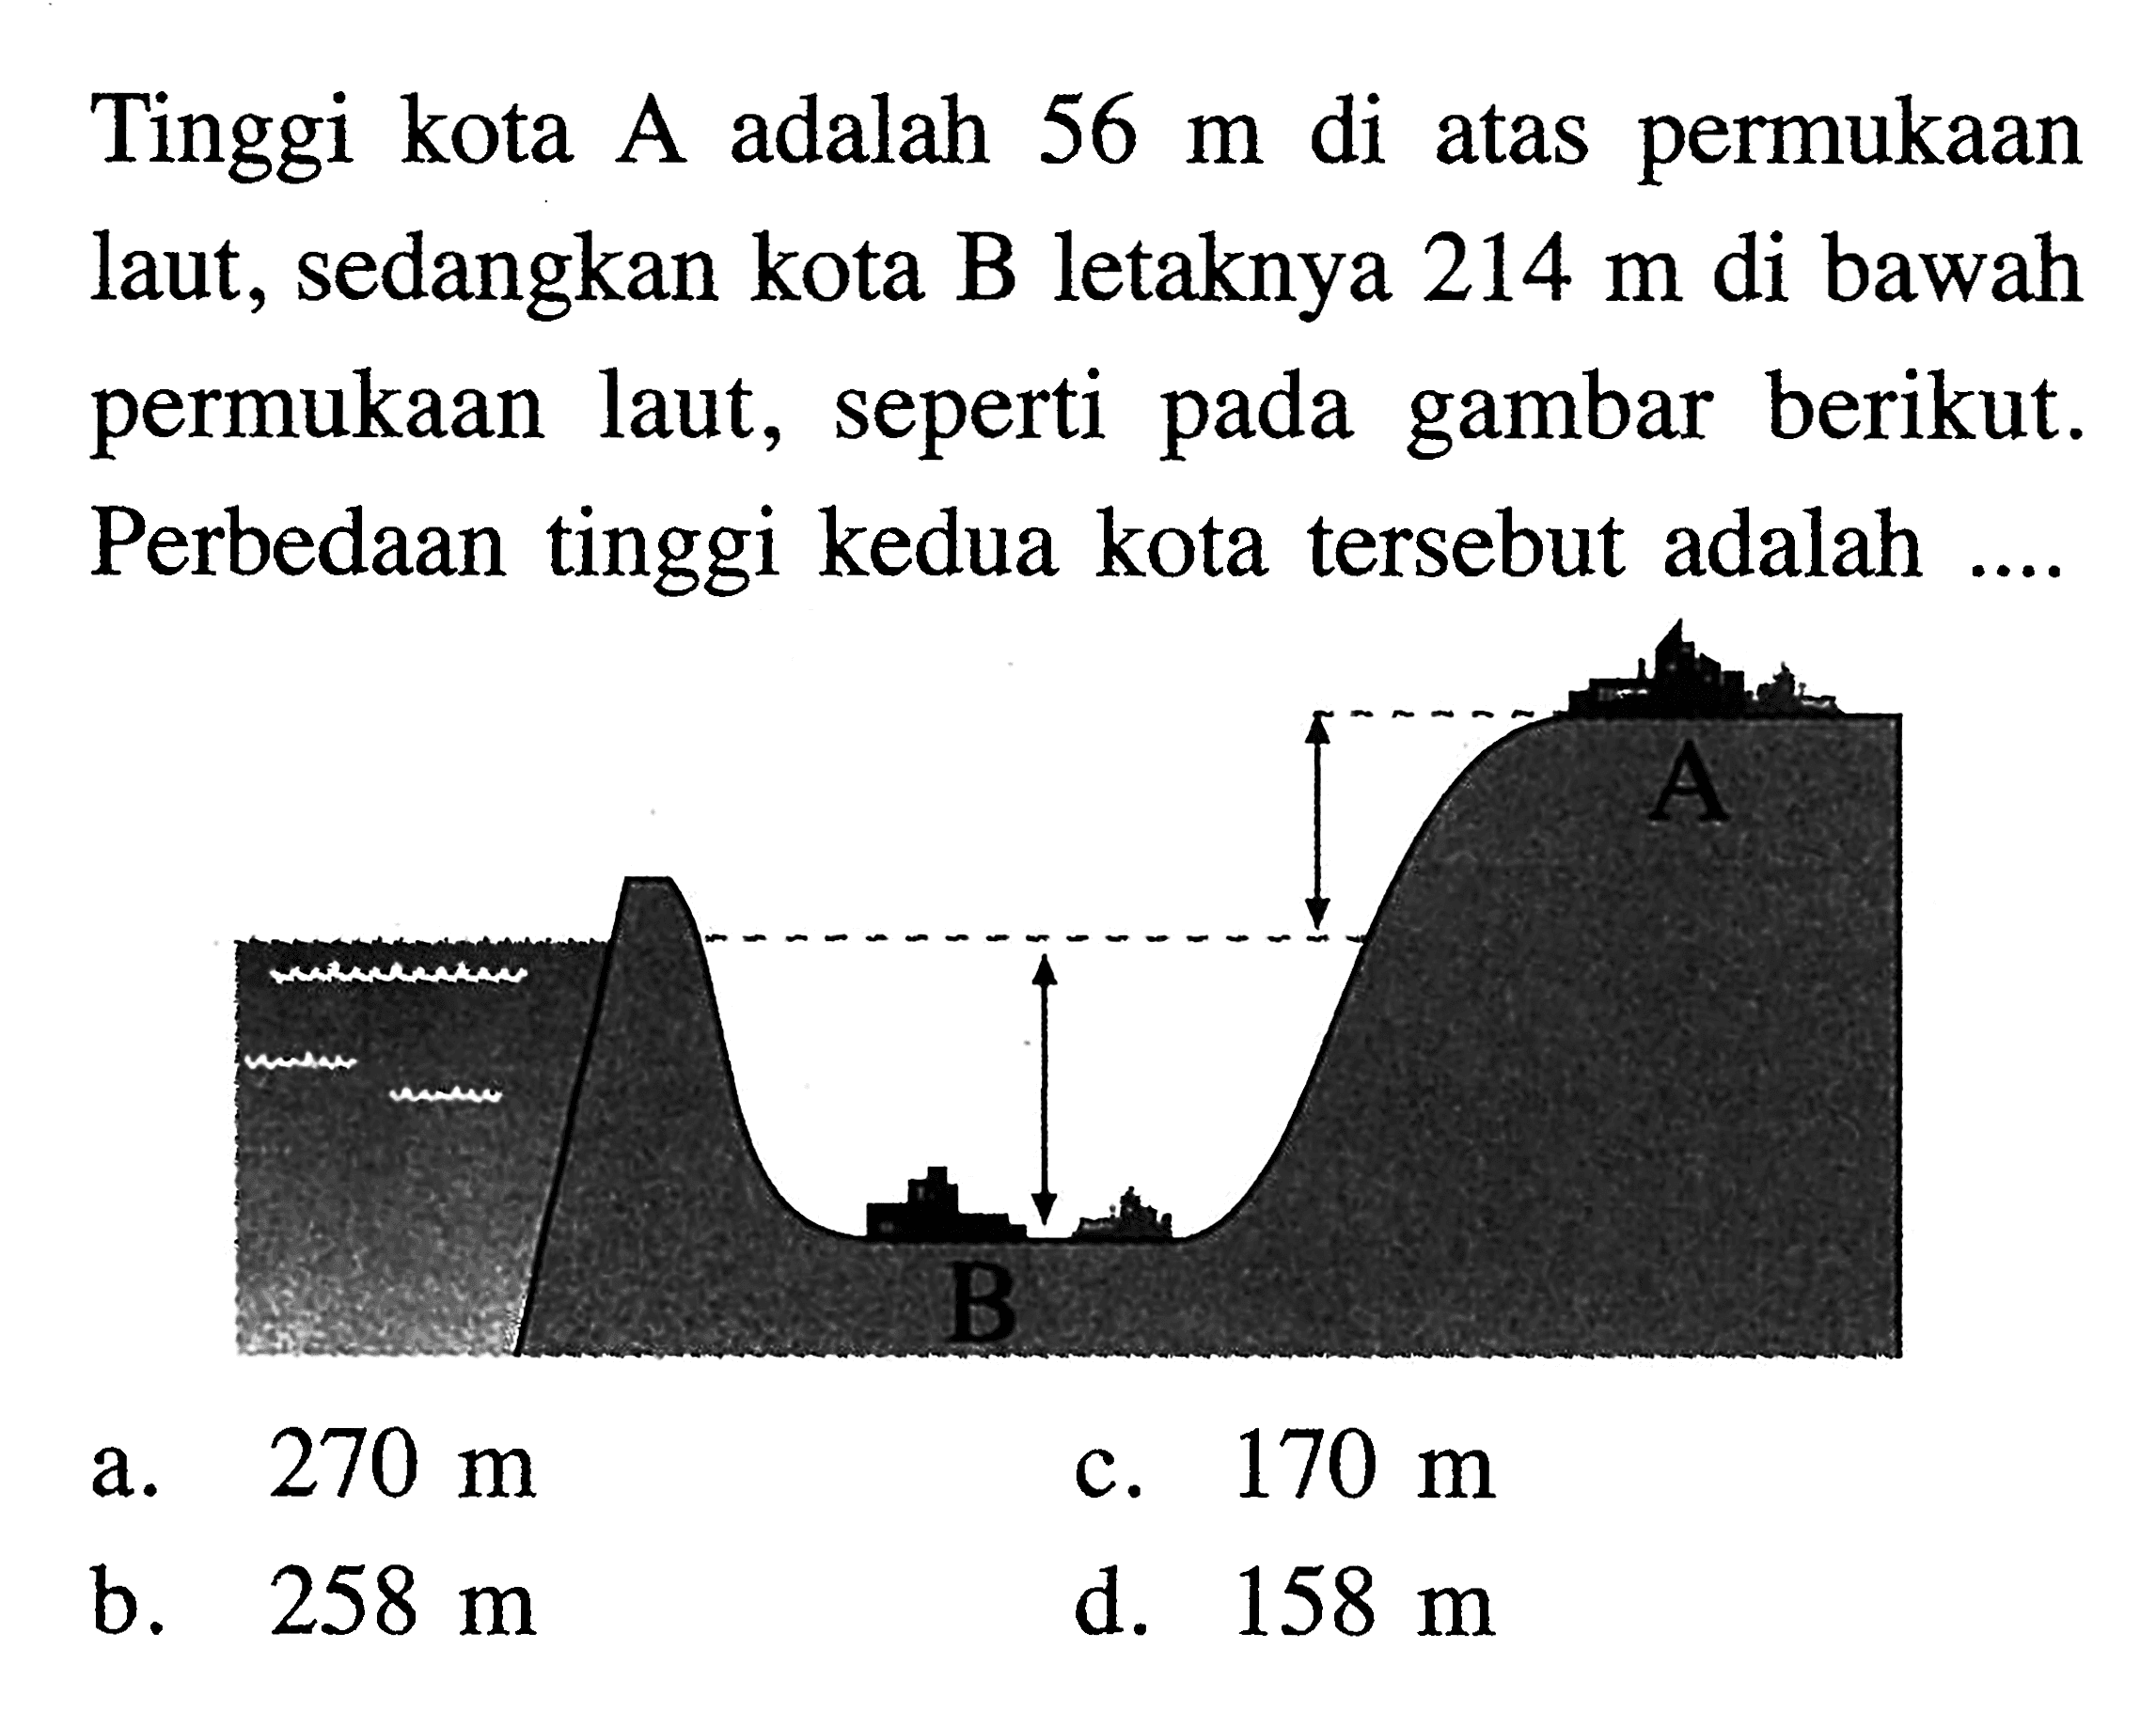 Tinggi kota A adalah 56 m di atas permukaan laut, sedangkan kota B letaknya 214 m di bawah permukaan laut, seperti pada gambar berikut. Perbedaan tinggi kedua kota tersebut adalah... a. 270 m b. 258 m c. 170 m d. 158 m